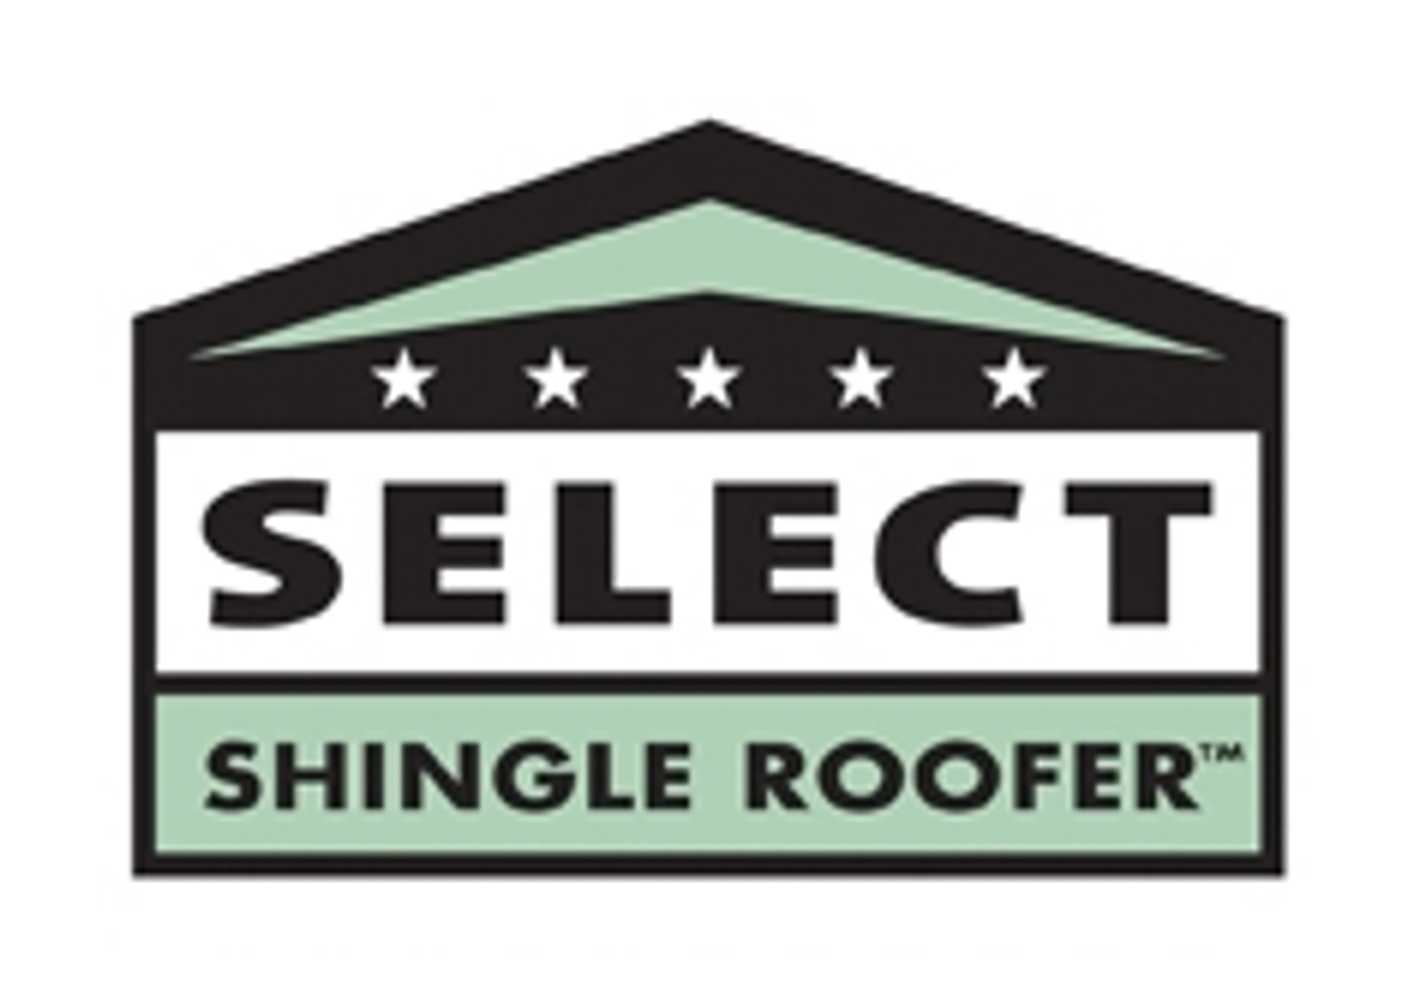 Milwaukee roofing contractor